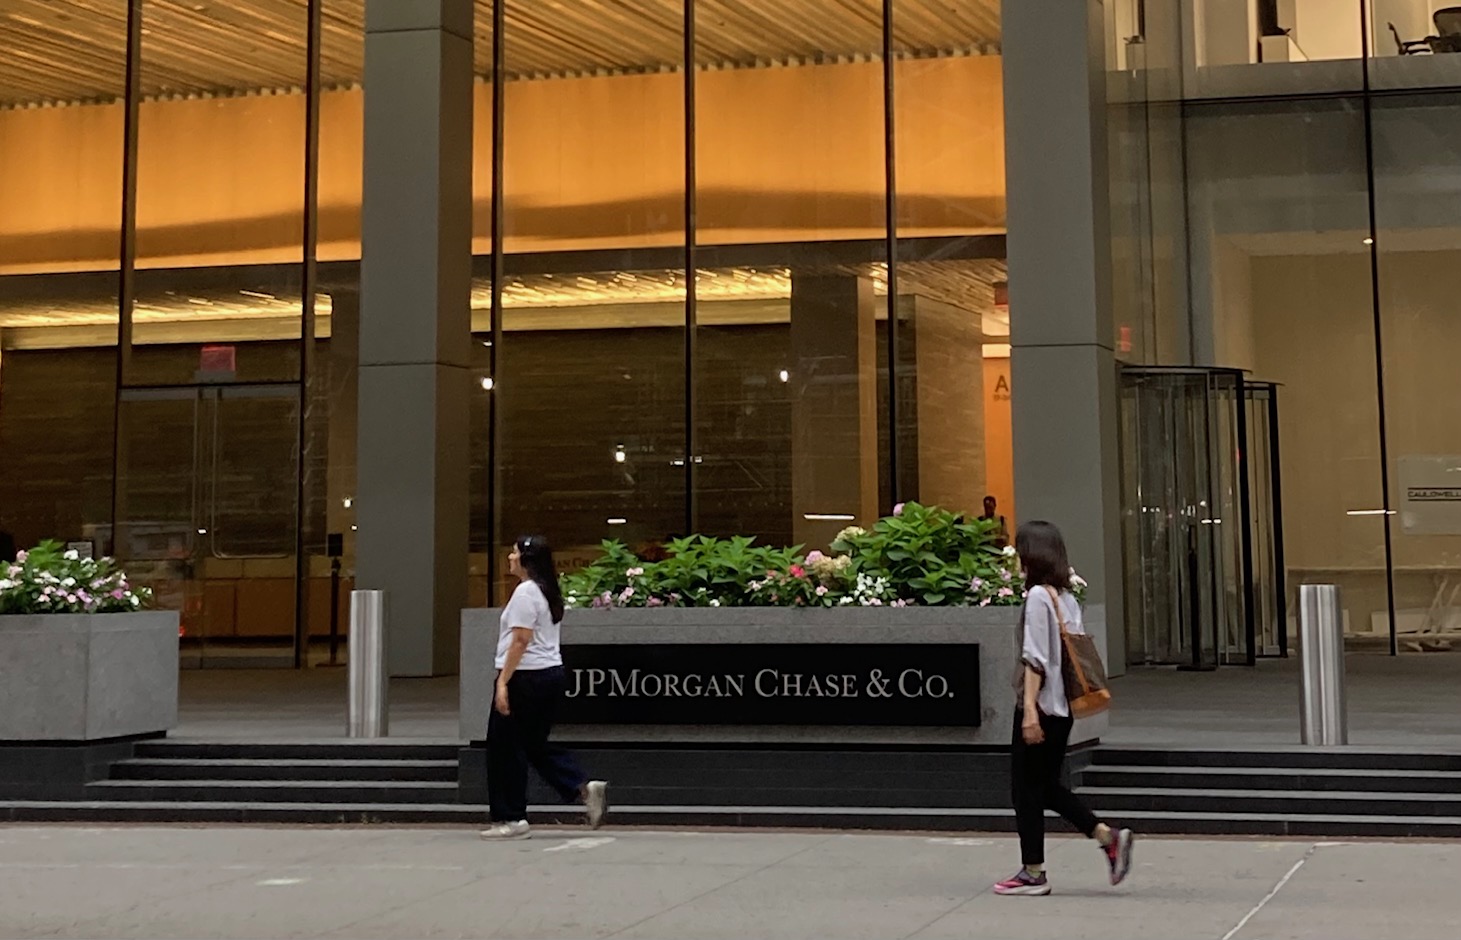 The JPMorgan Chase headquarters in Manhattan, New York. (Source photo)